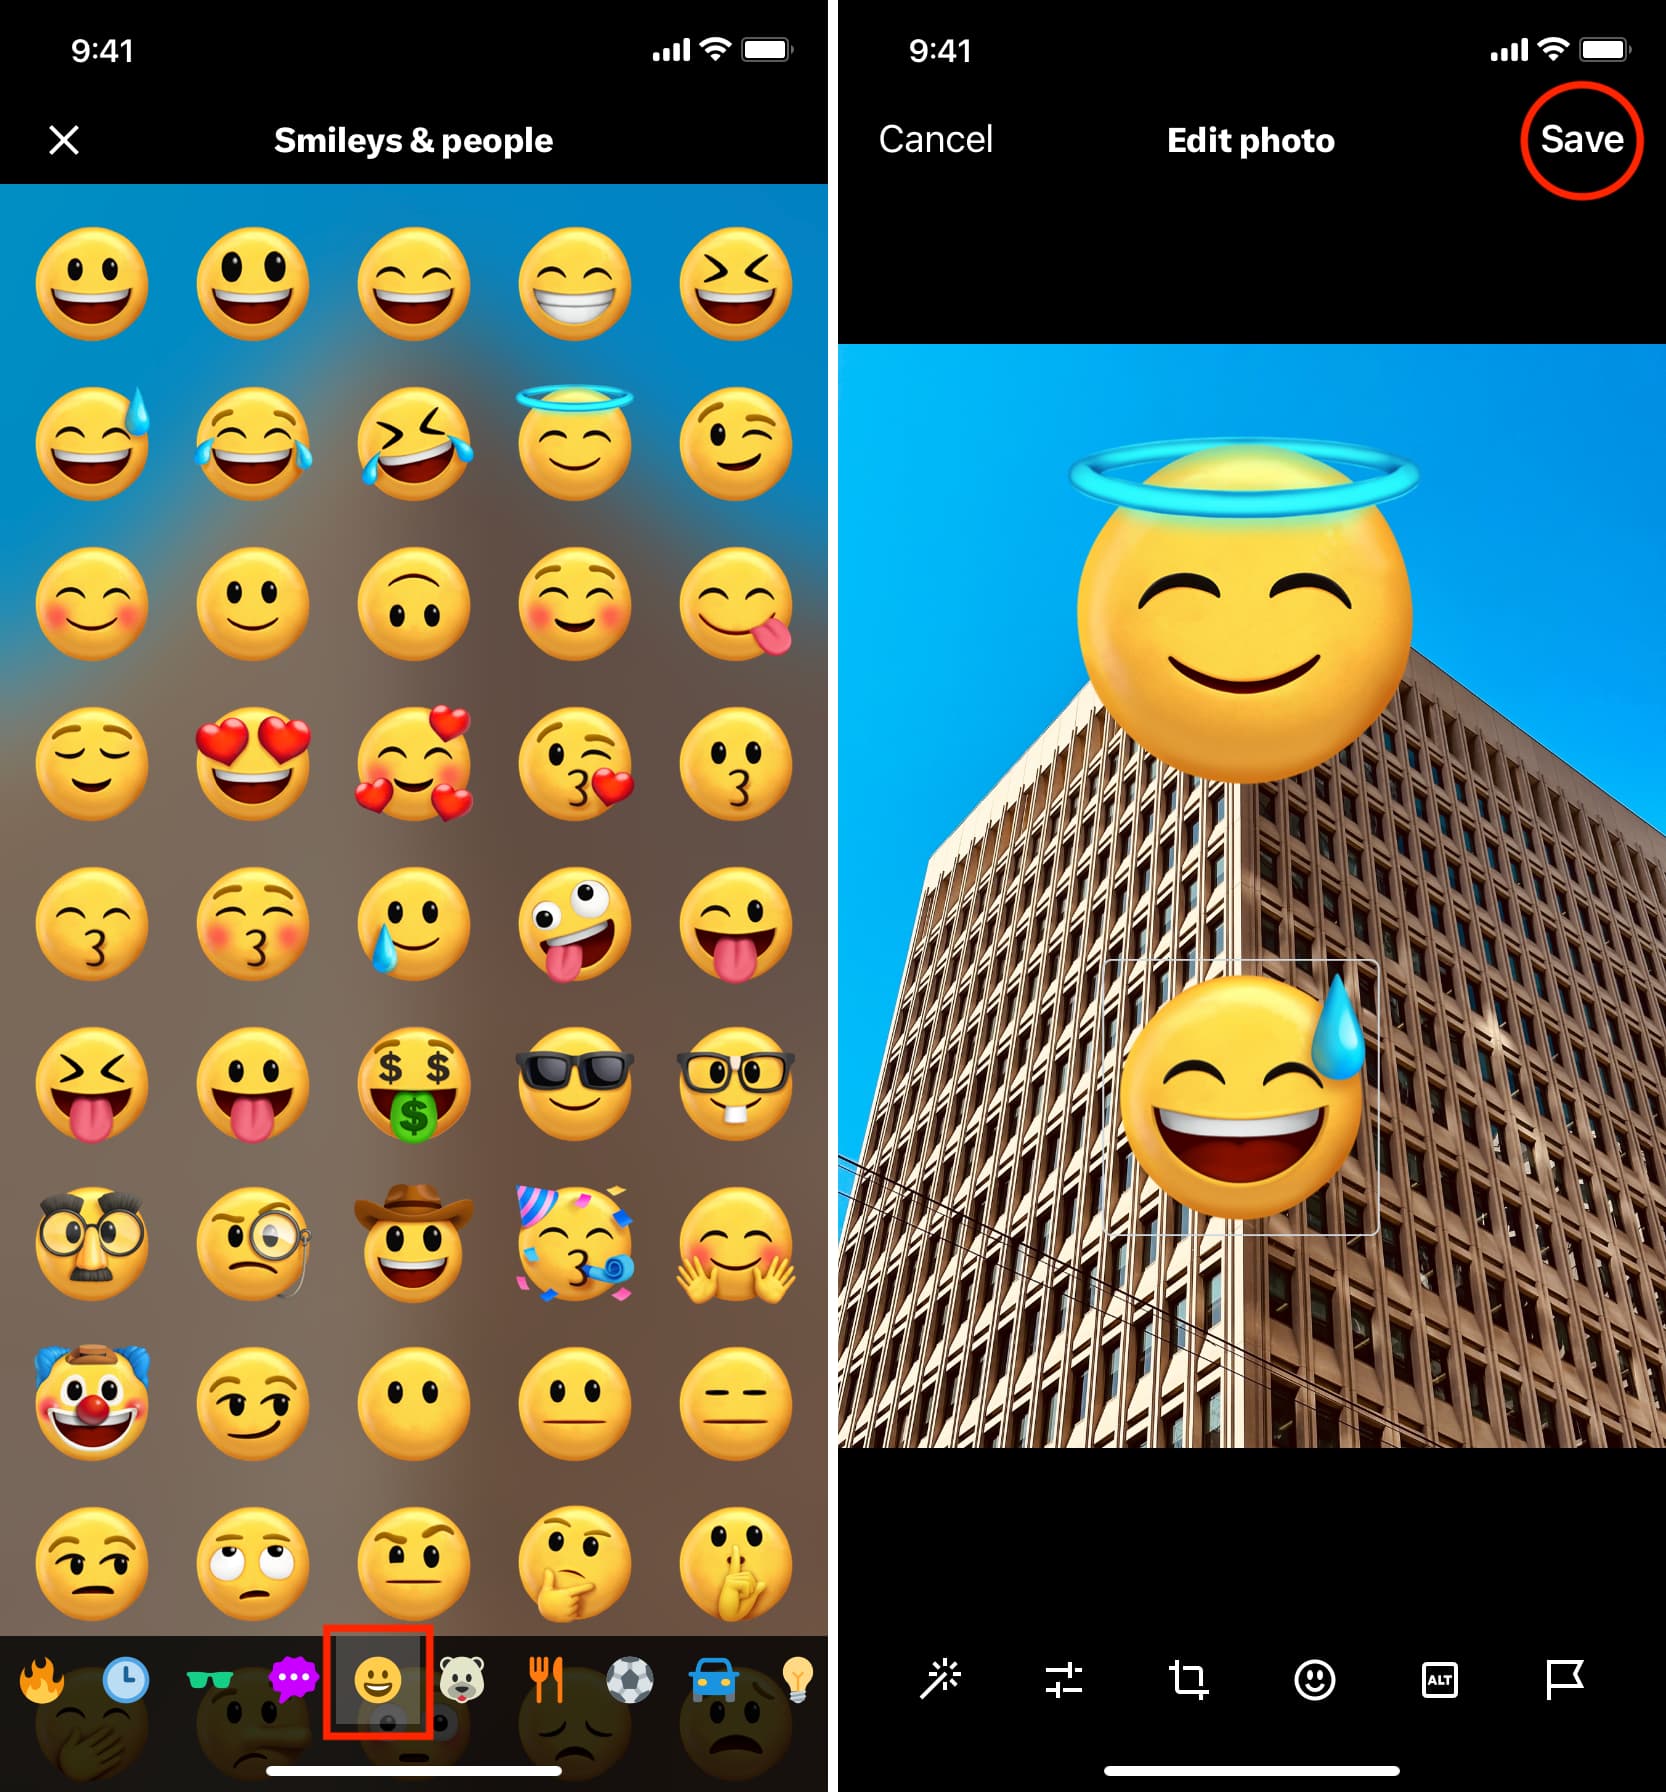 Pick desired emoji to add to photo in Twitter app